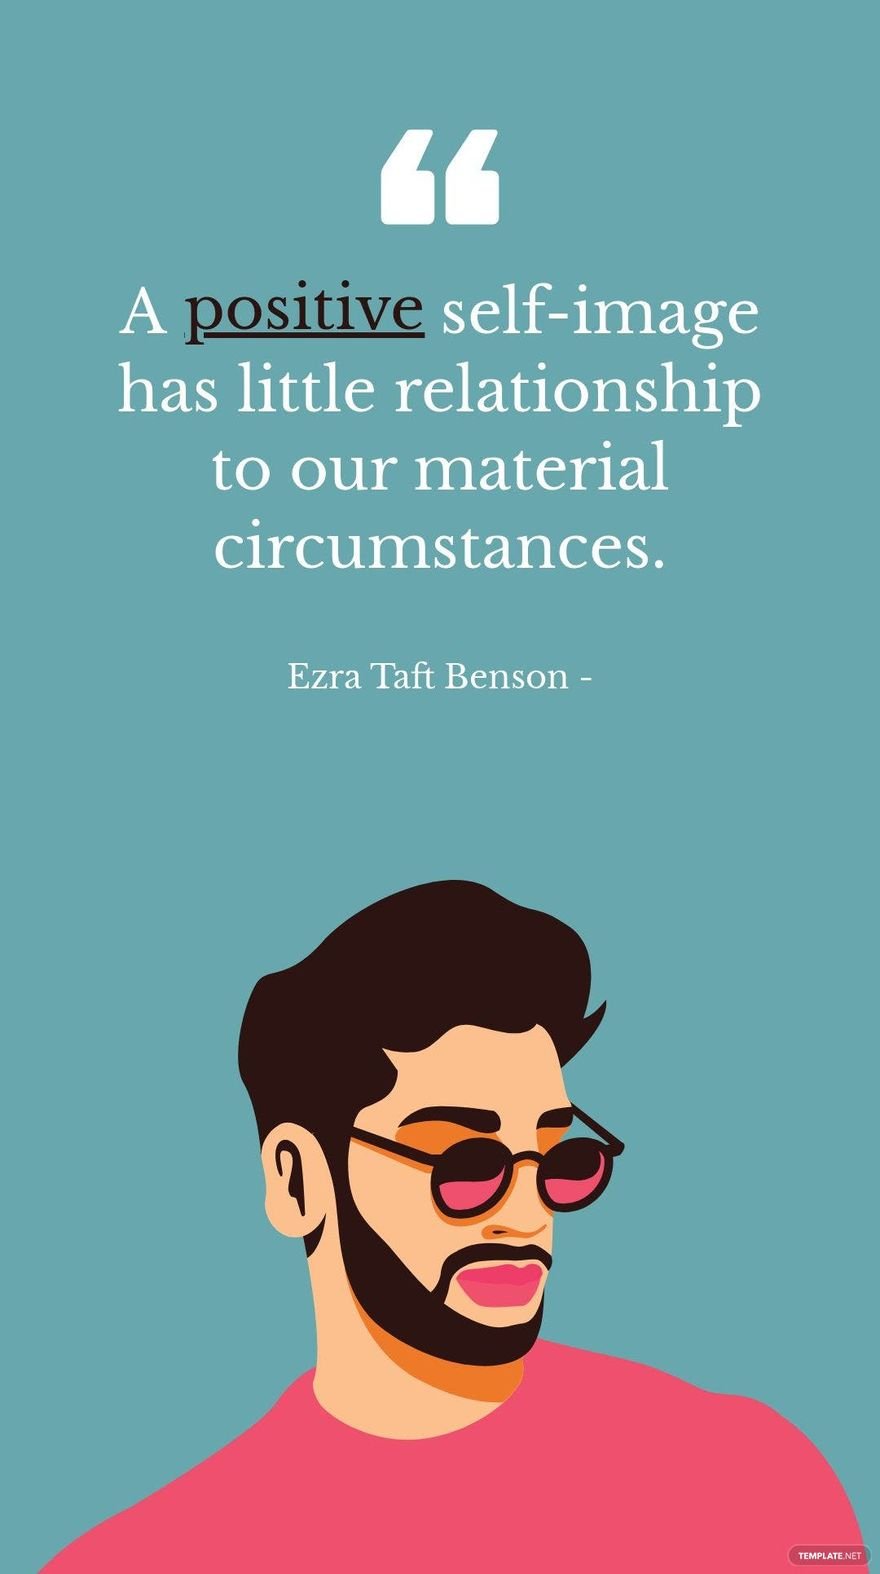 Ezra Taft Benson - A positive self-image has little relationship to our material circumstances.